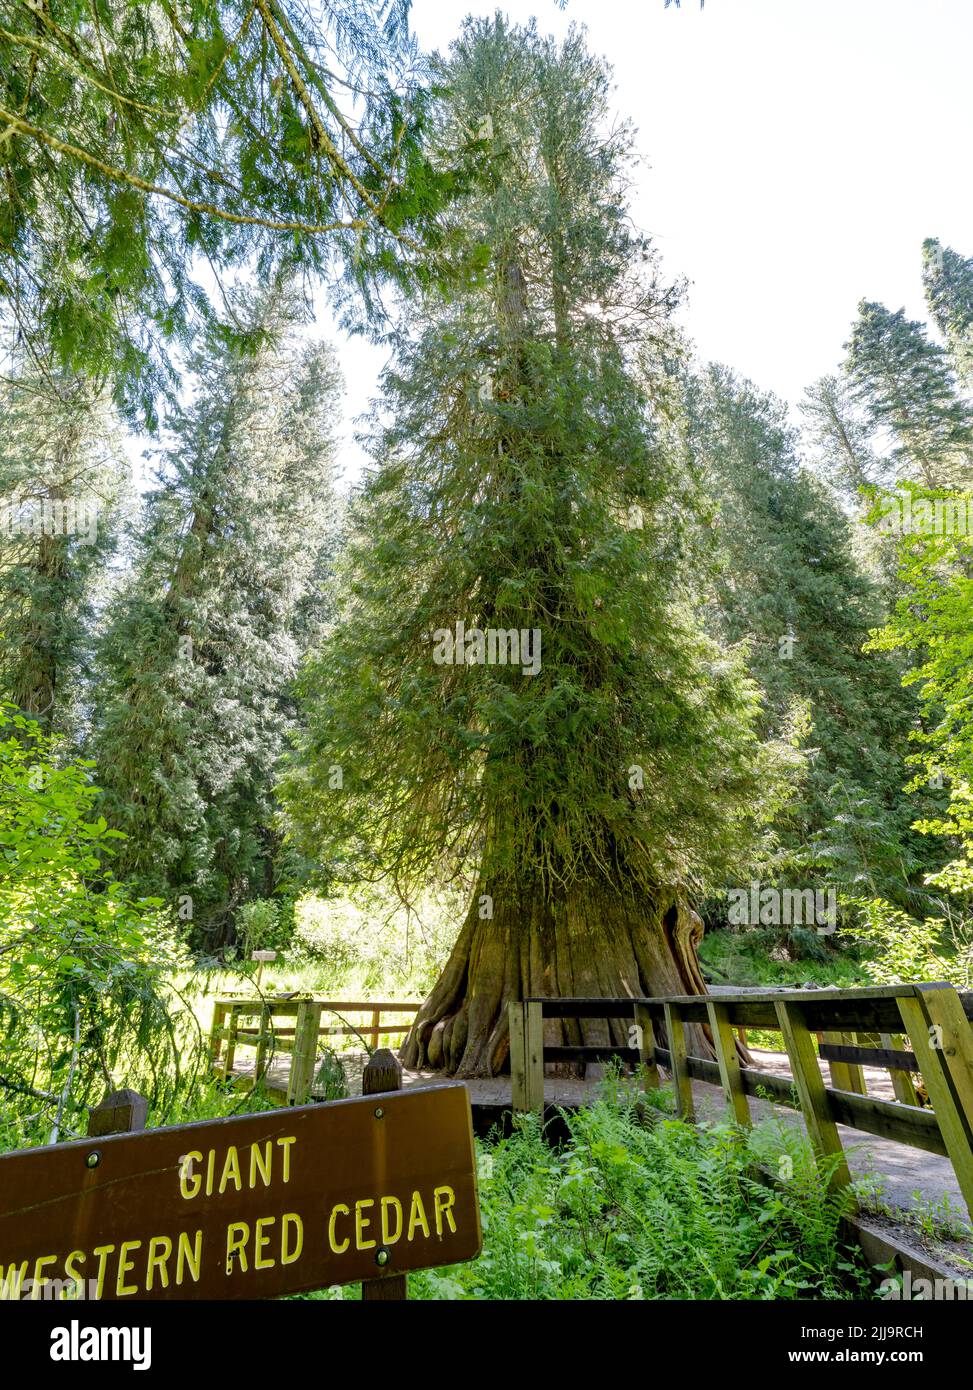 Giant Red Cedar tree and sign near Elk River Idaho Stock Photo